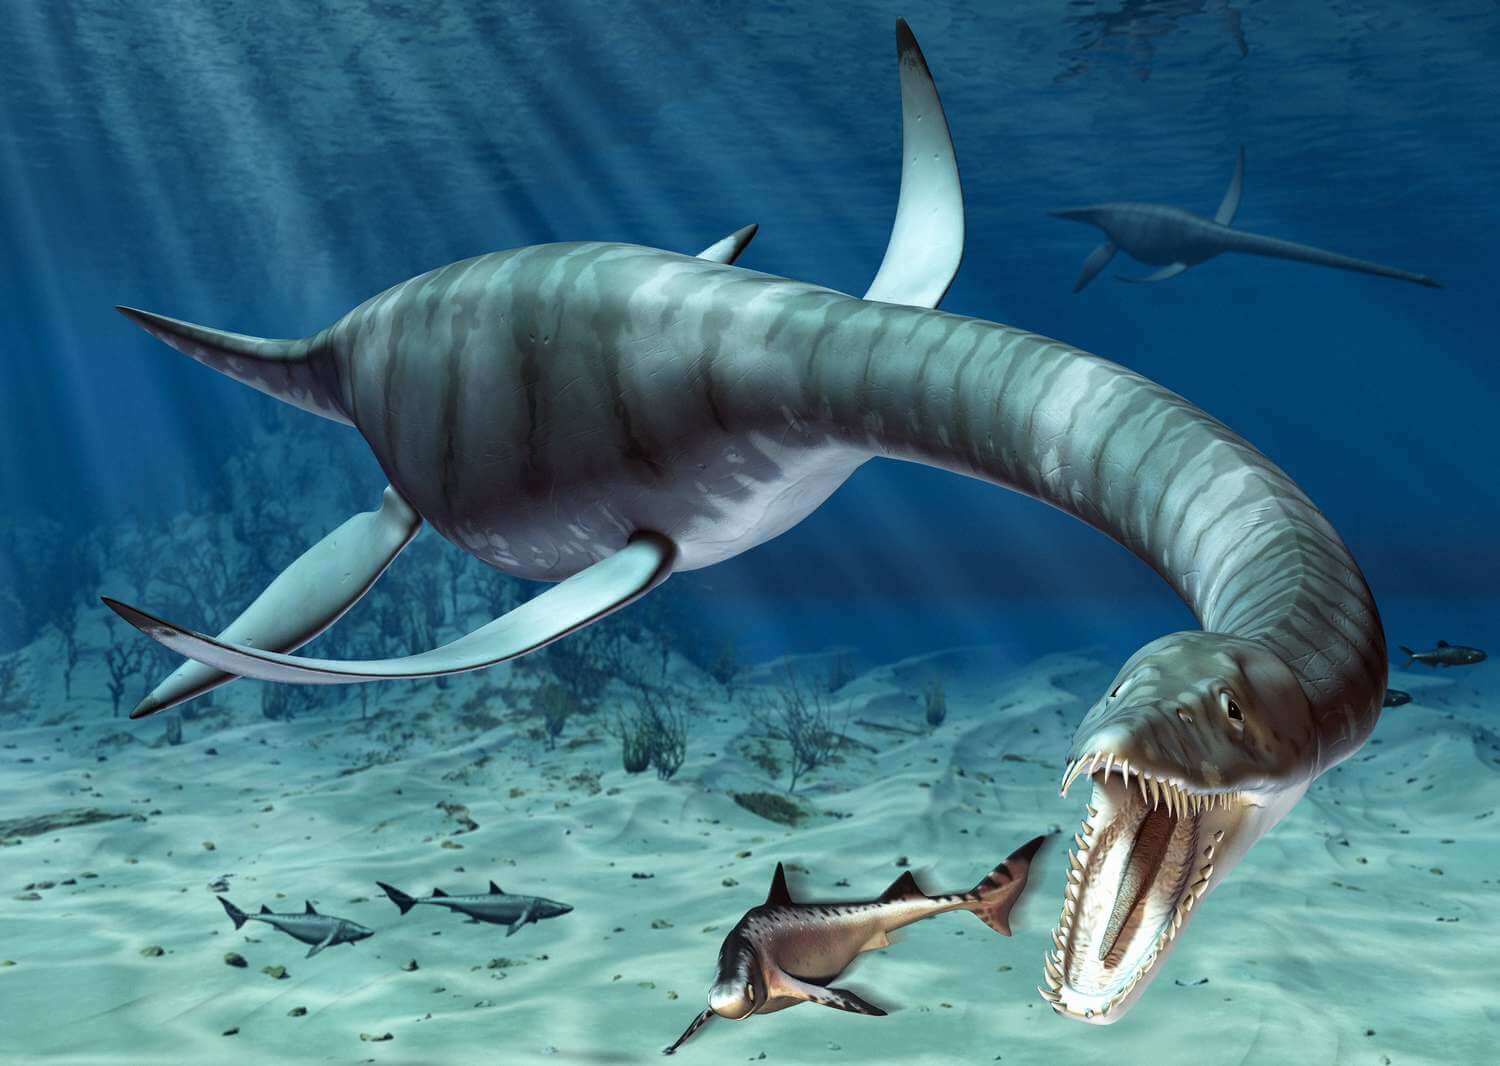 A digital illustration of a Plesiosaur hunting a fish on the ocean floor.